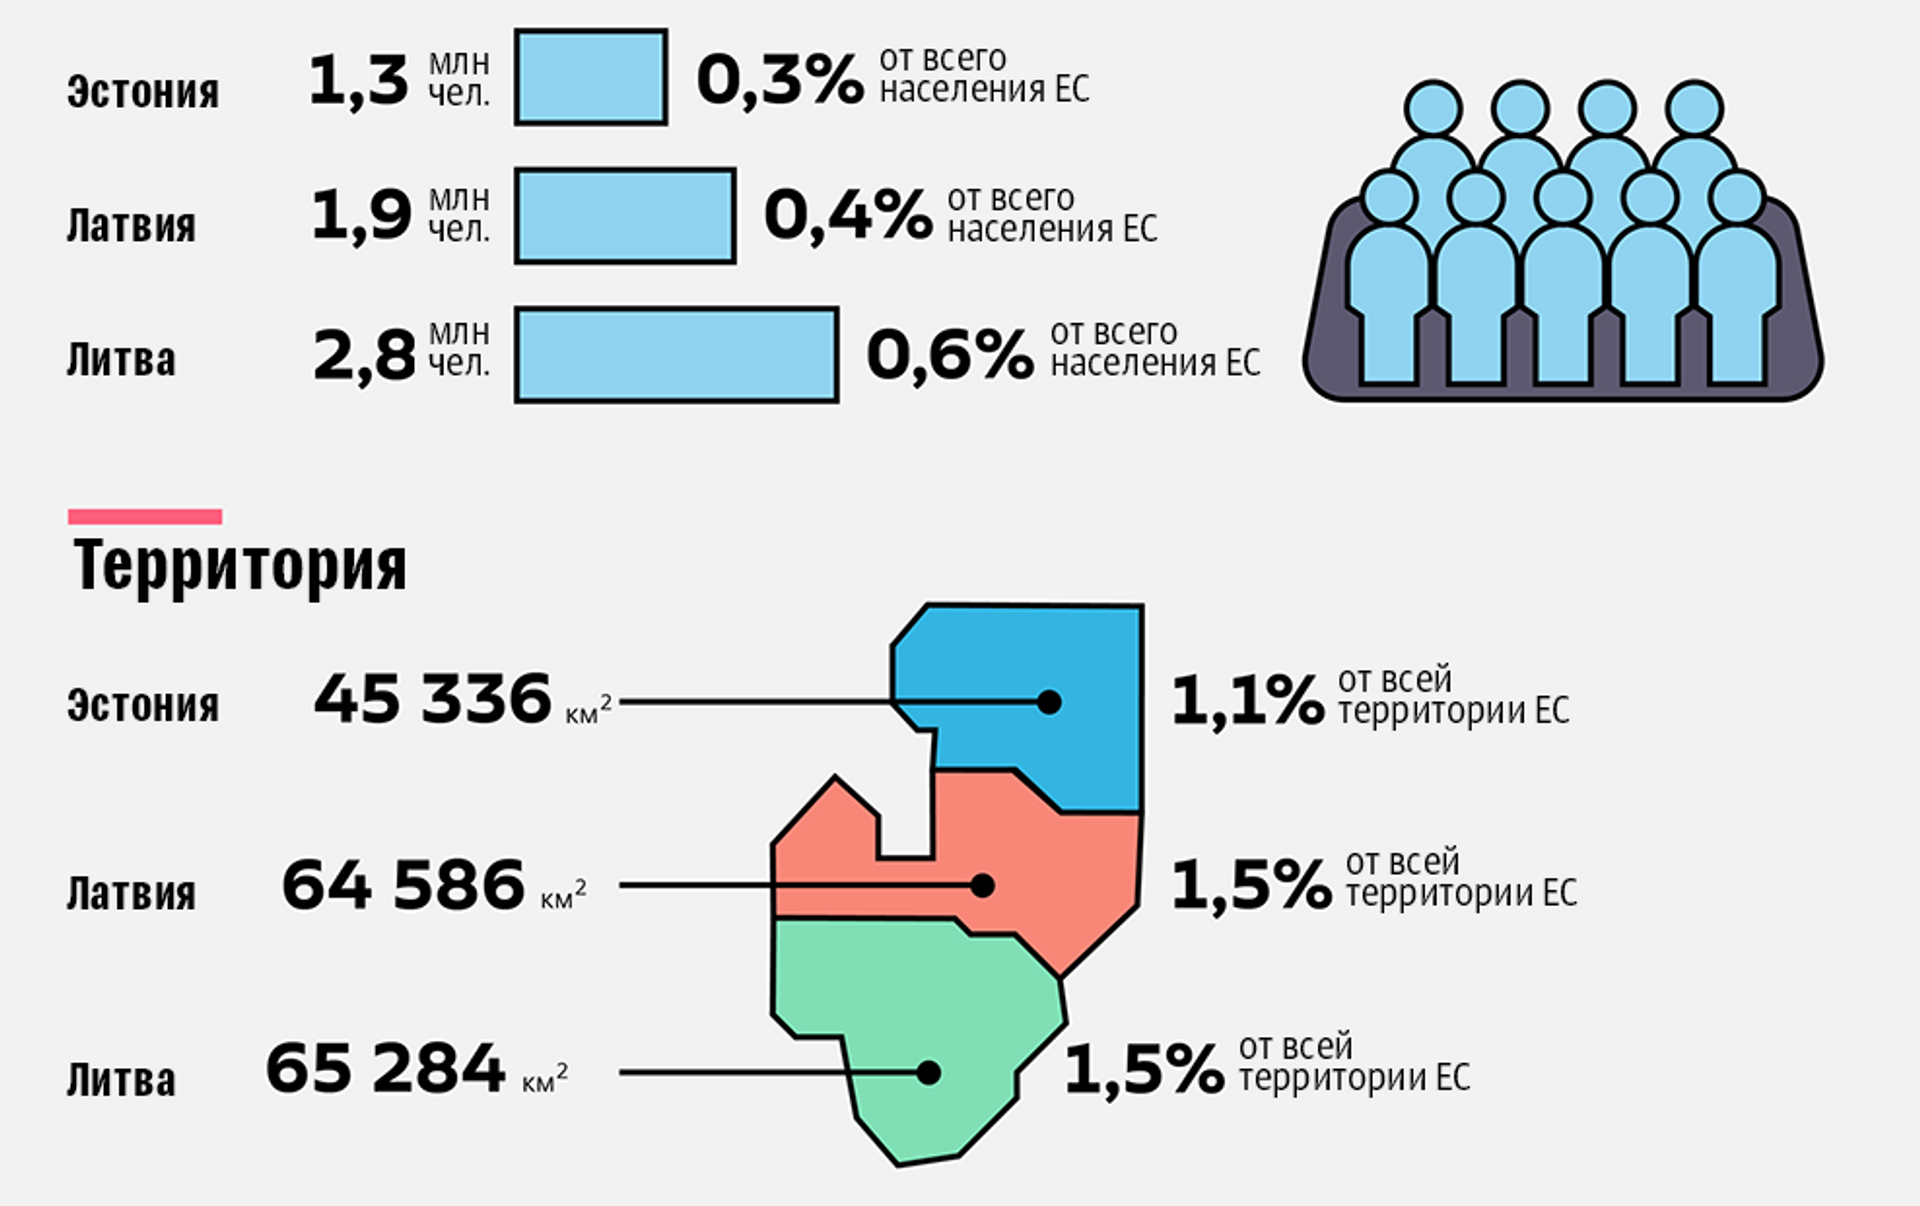 ЕС В цифрах. Страны Балтии факты. Евросоюз в цифрах. ЕС В цифрах 2021.